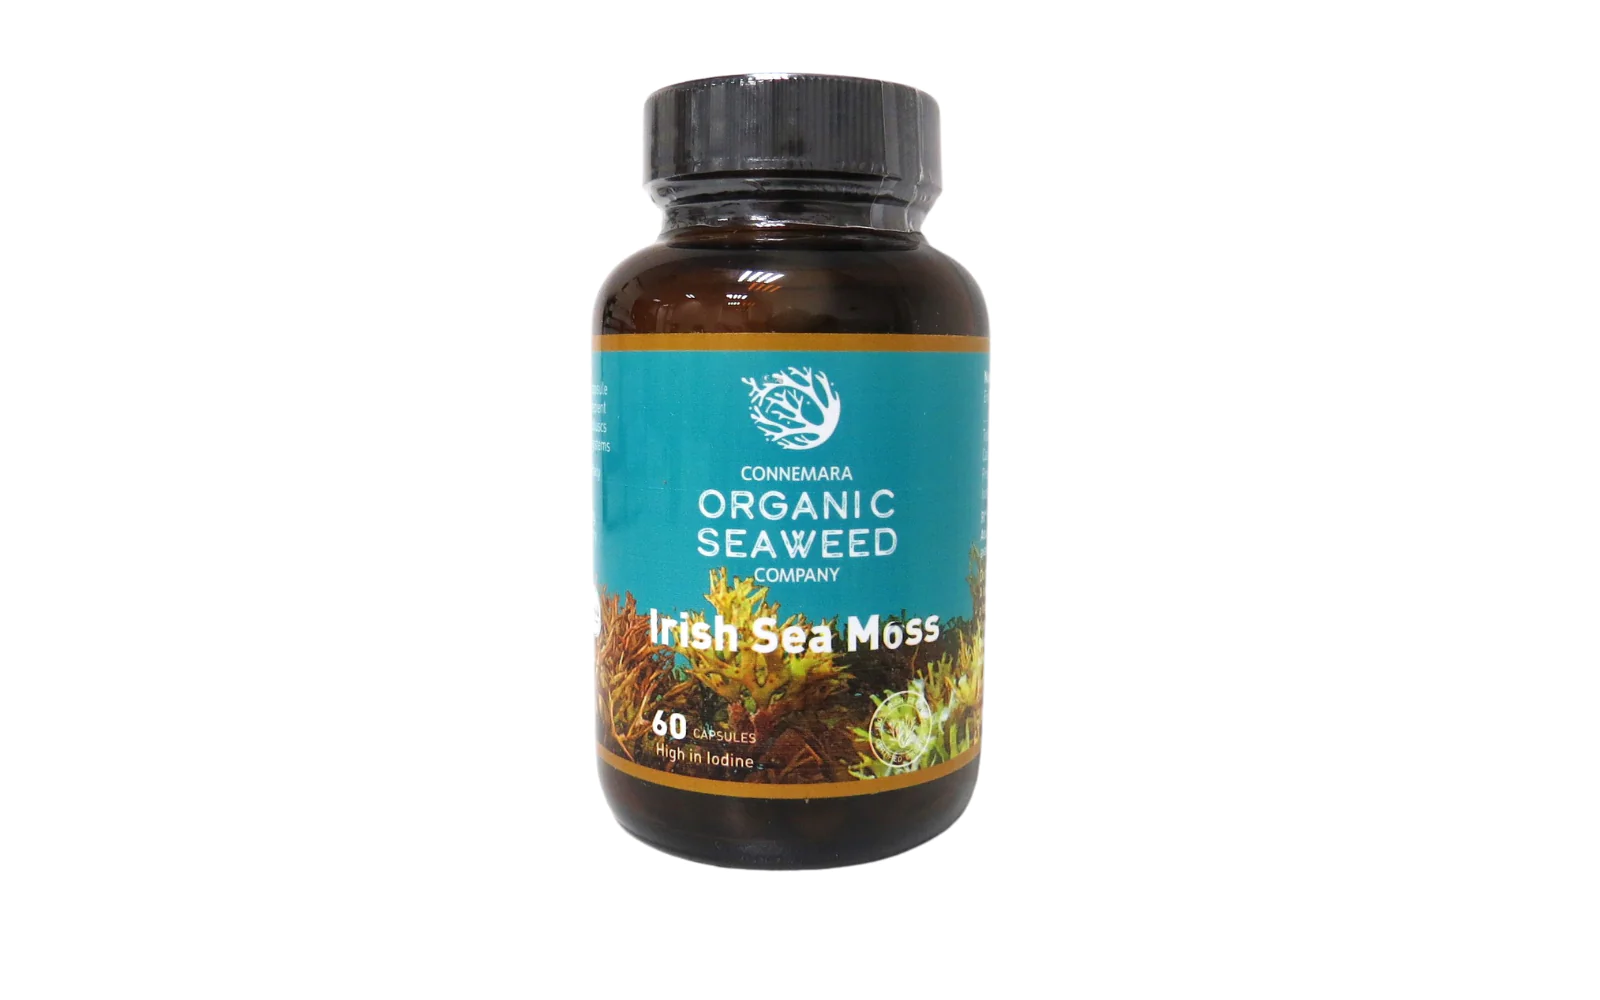 Connemara Organic Sea Weed Company Irish Sea Moss Capsules